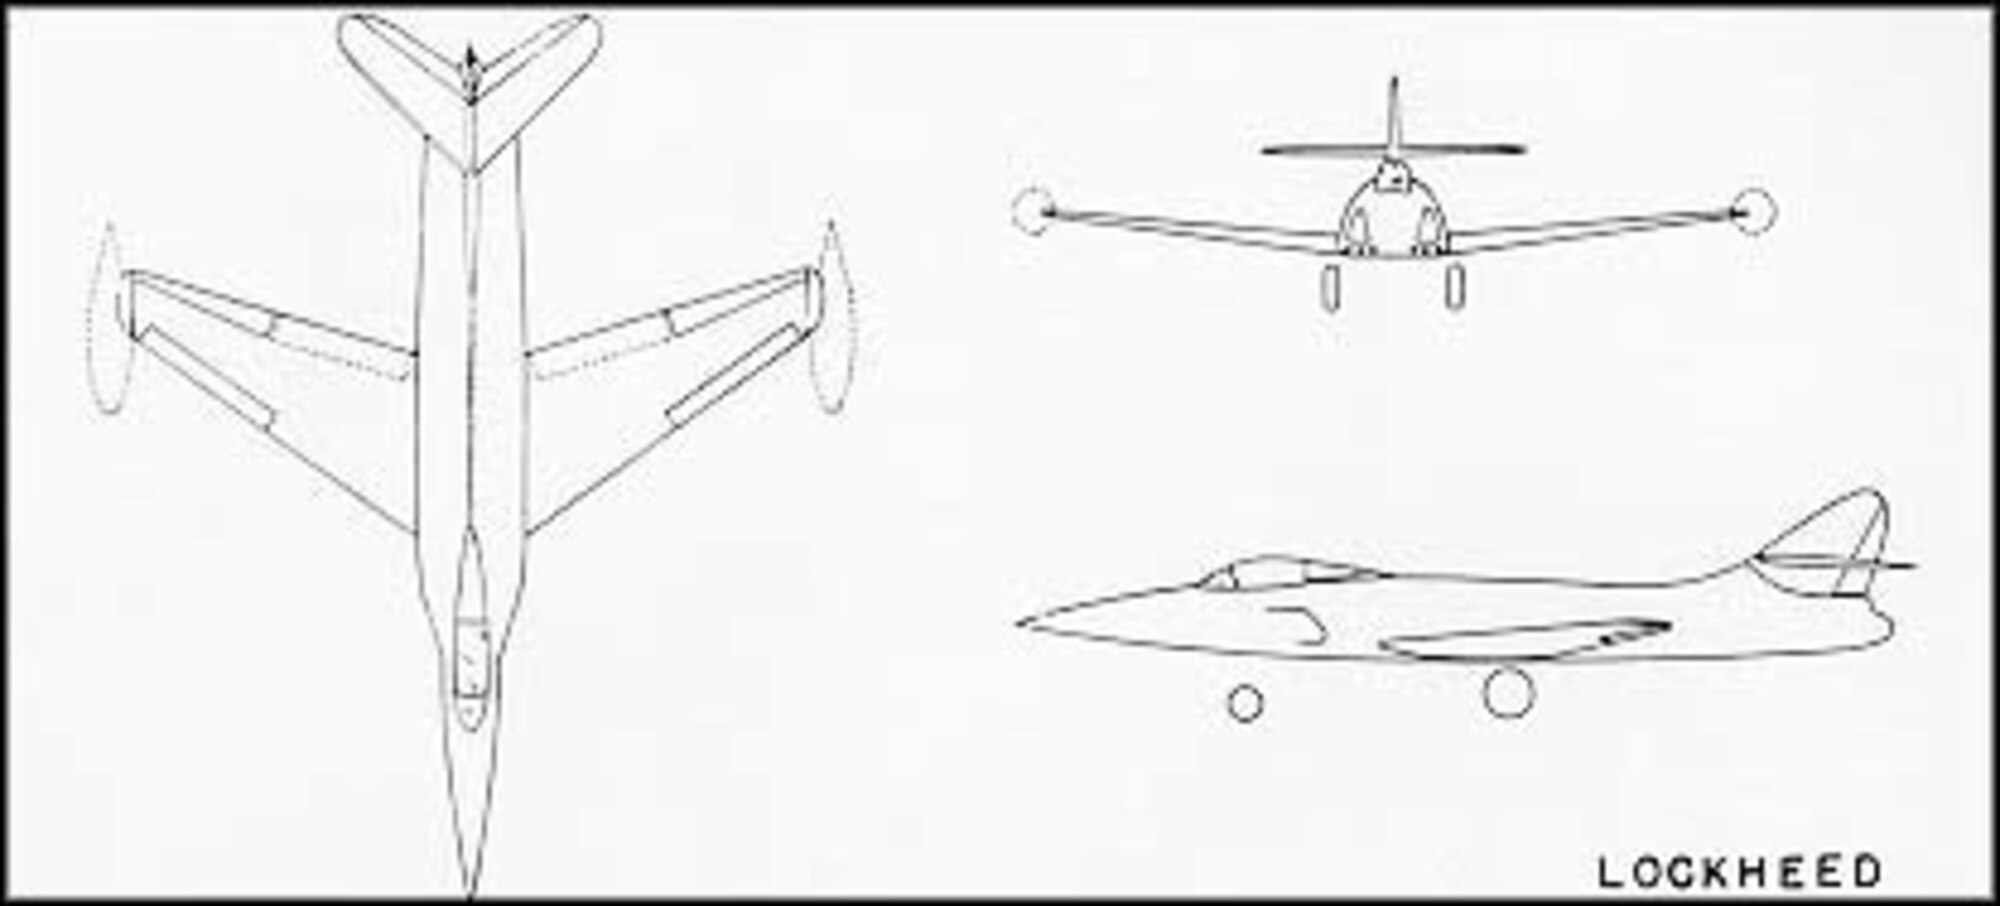 Lockheed XF-90 diagram.